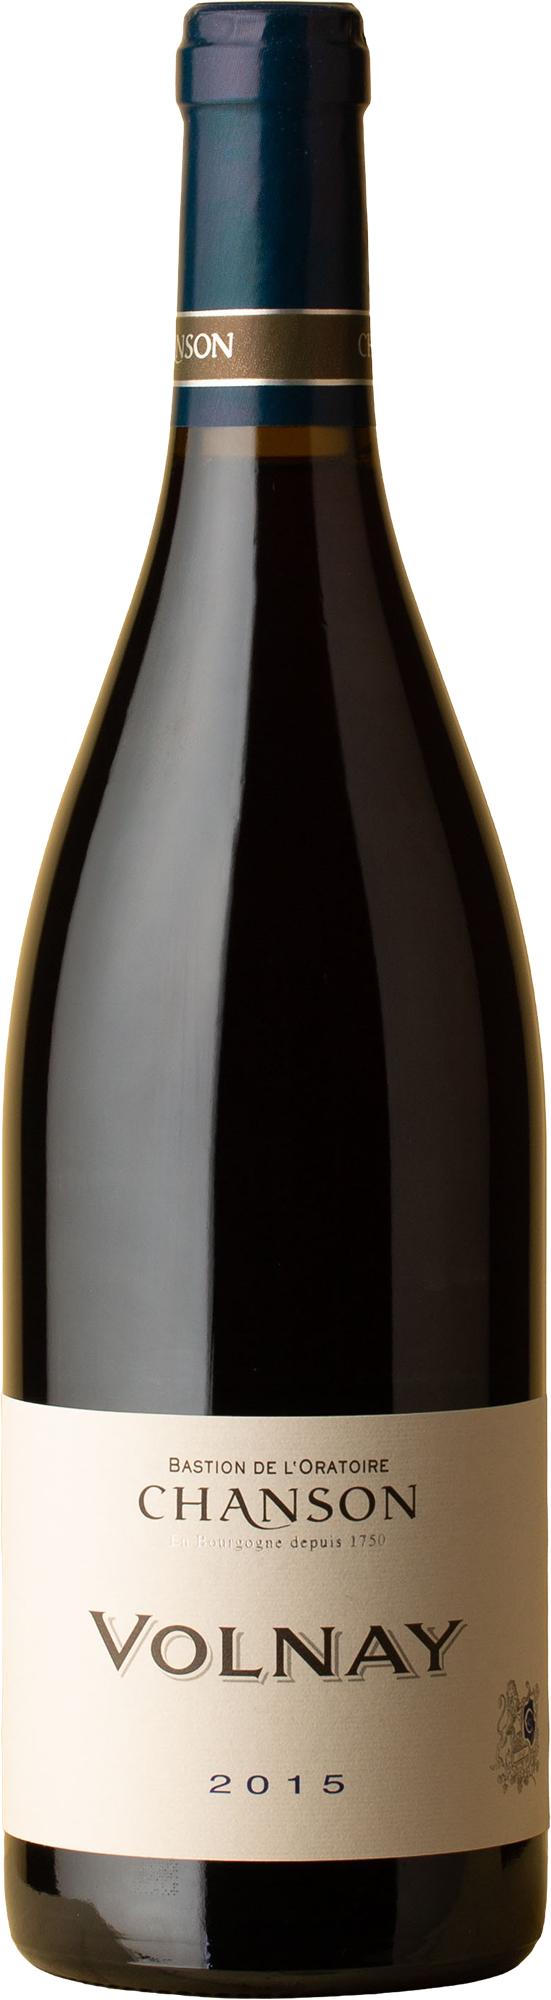 Chanson - Volnay Pinot Noir 2015 Red Wine